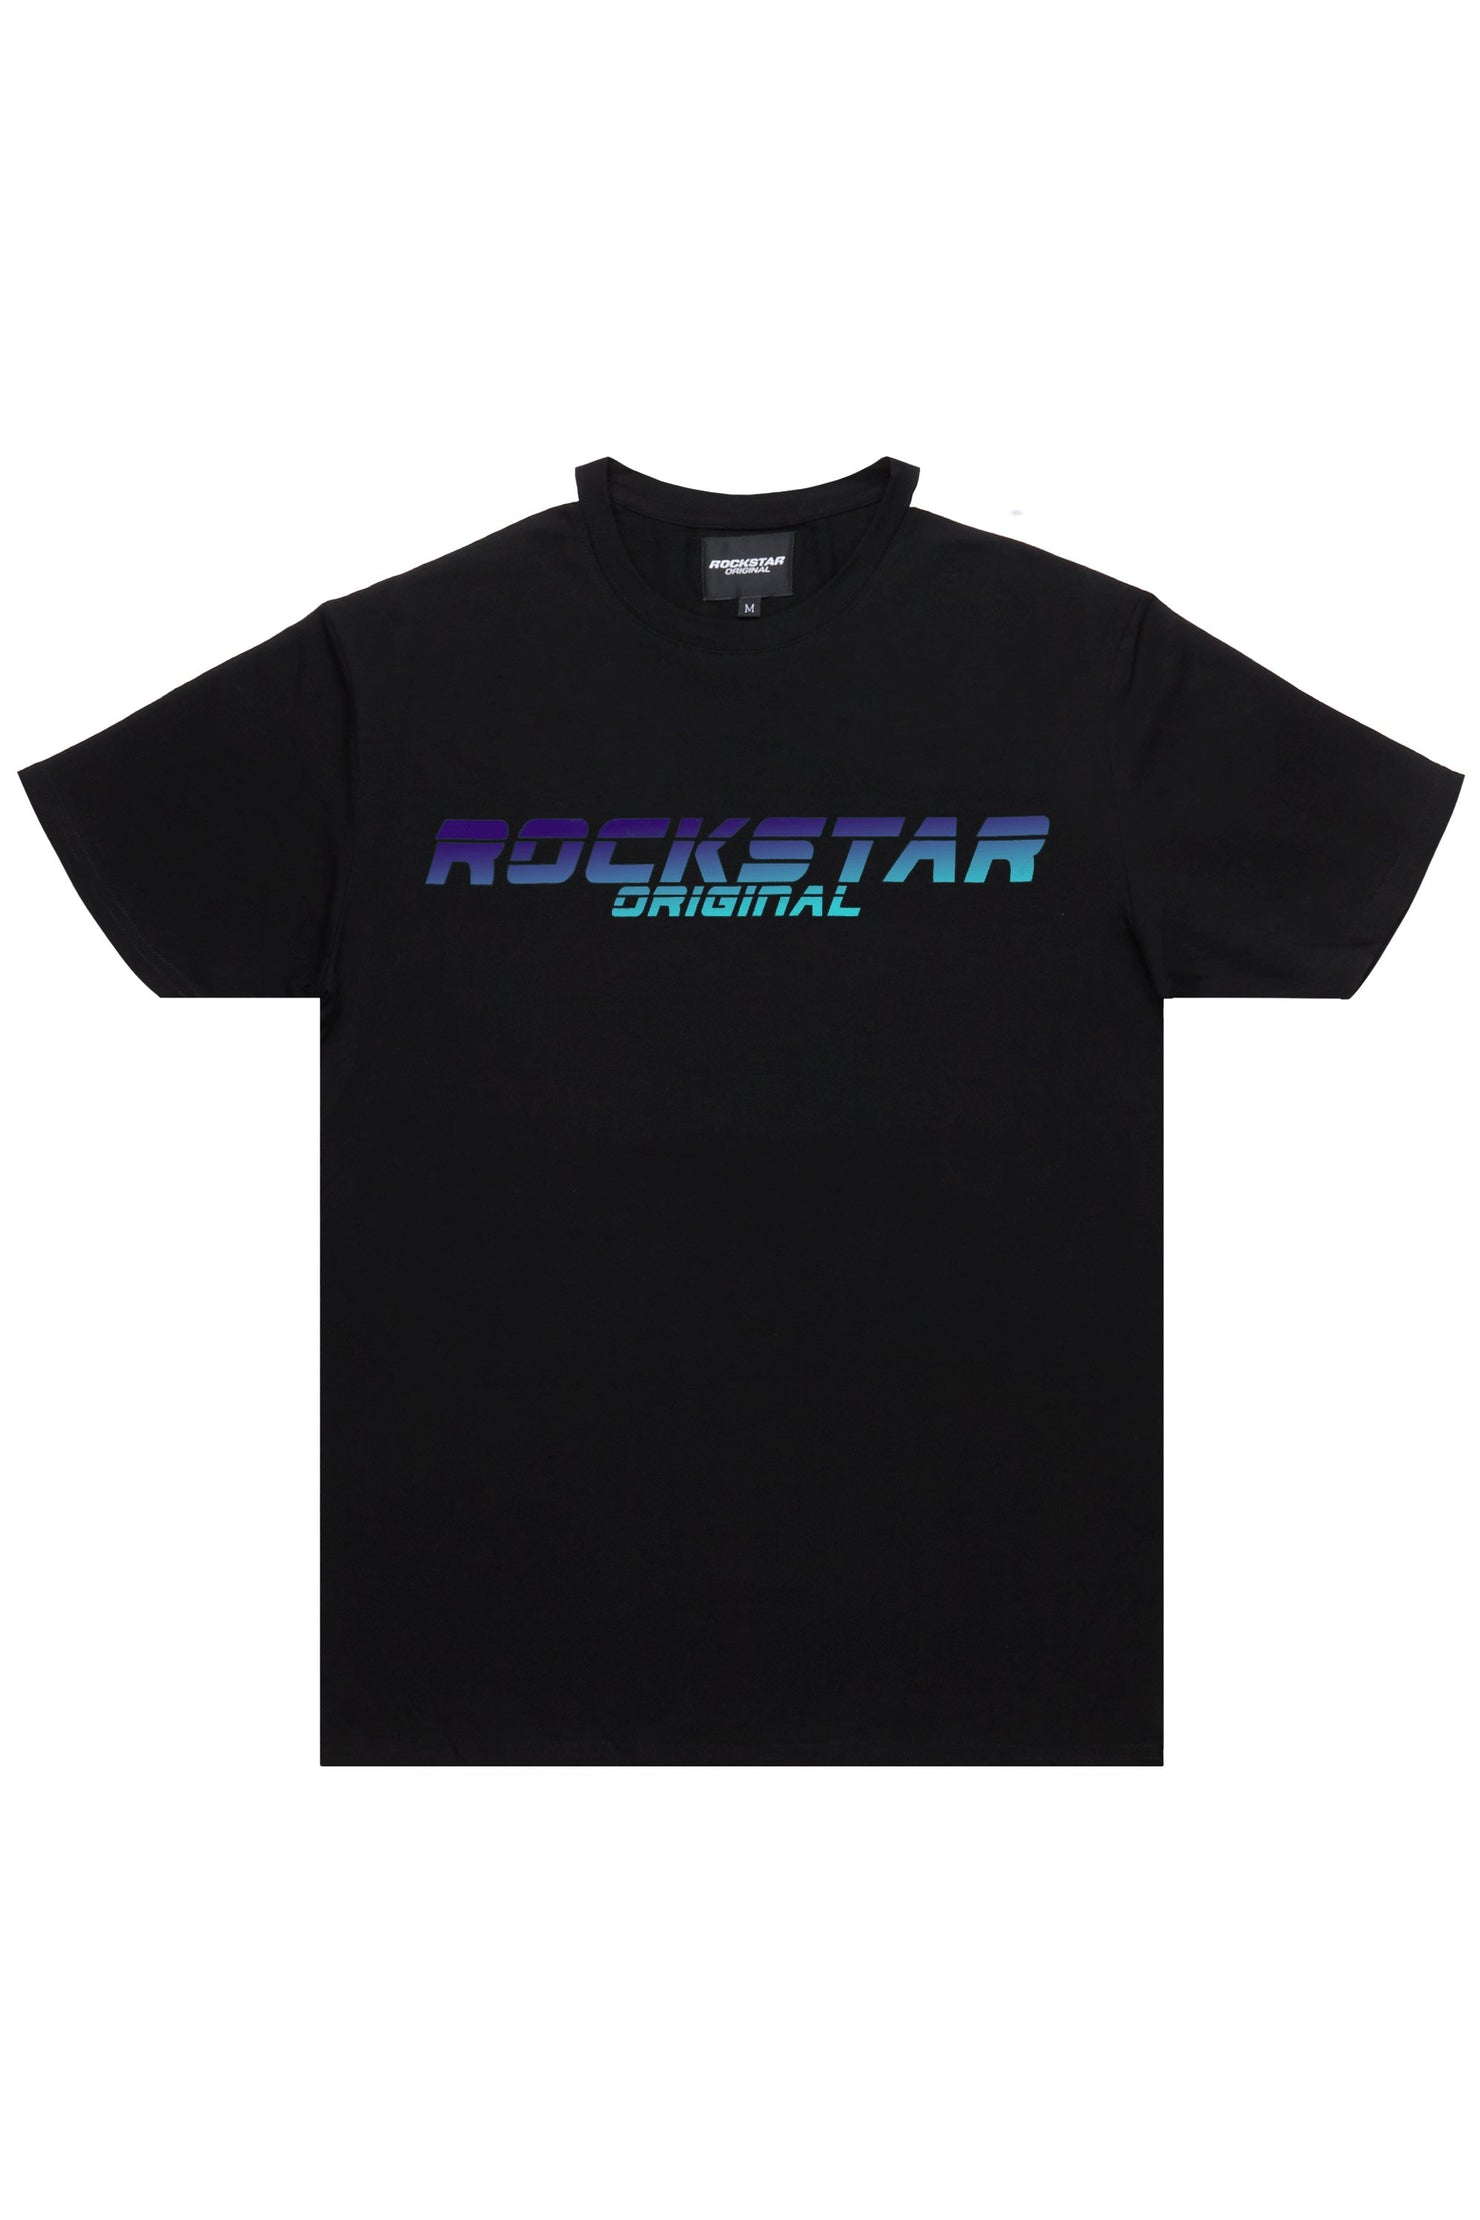 Rockstar Original Criss Black Reflective T Shirt AMAZON